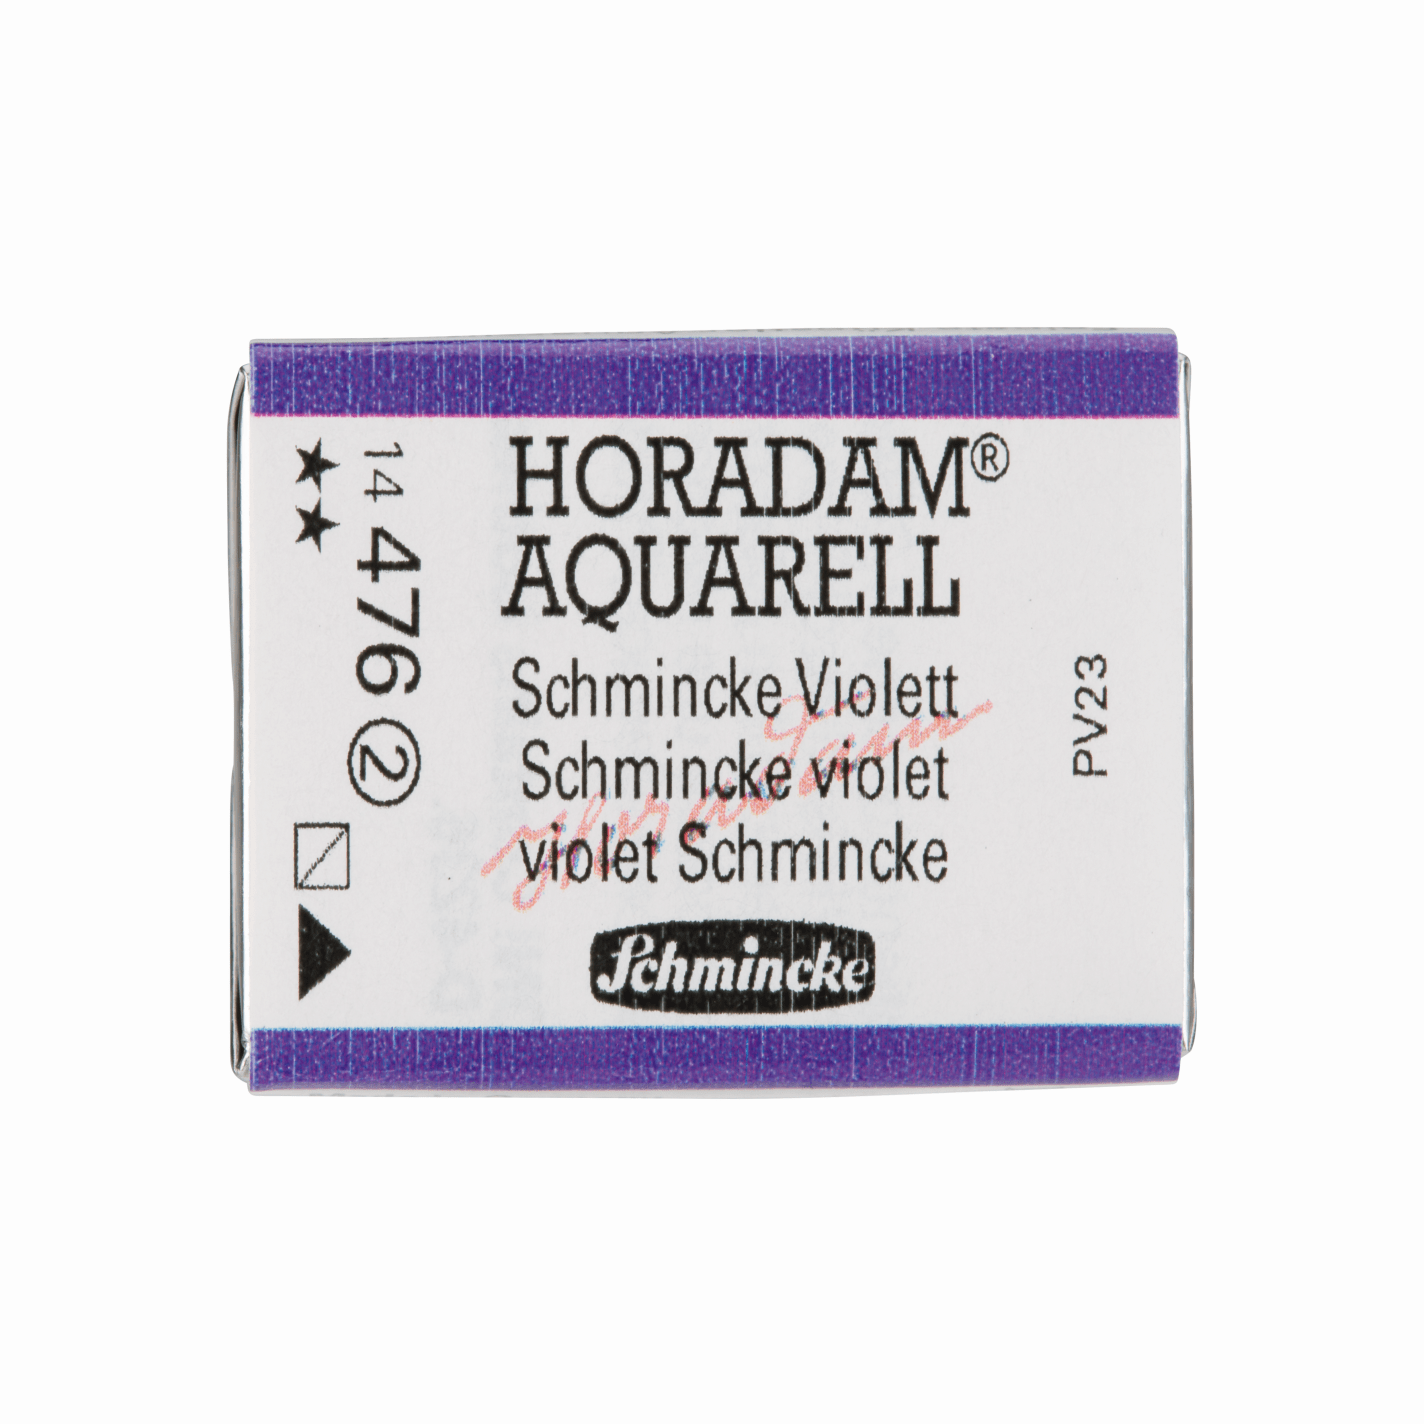 Schmincke Horadam Aquarell pans 1/1 pan Schmincke Violet